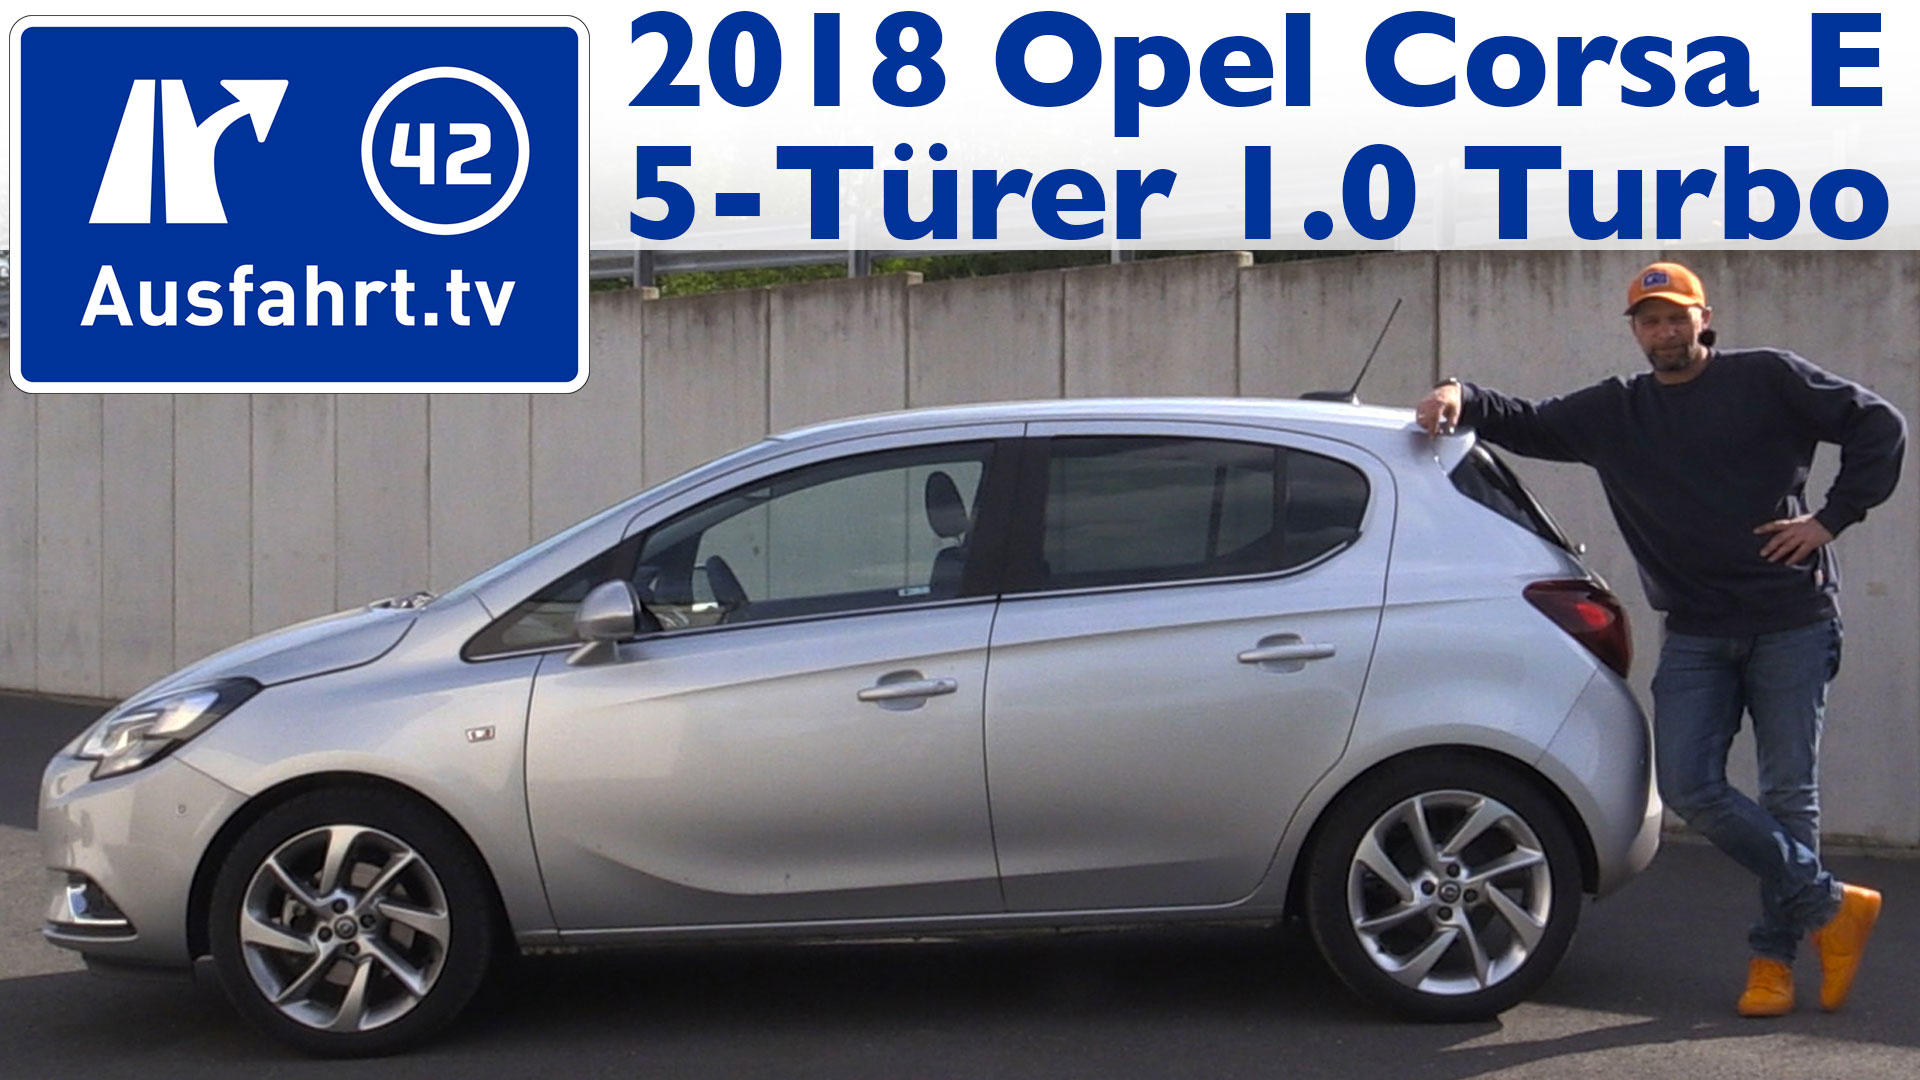 https://ausfahrt.tv/wp-content/uploads/2018/05/2018-Opel-Corsa-5T-Innovation-1.0-Turbo-115-PS-Kaufberatung-Test-Review.jpg